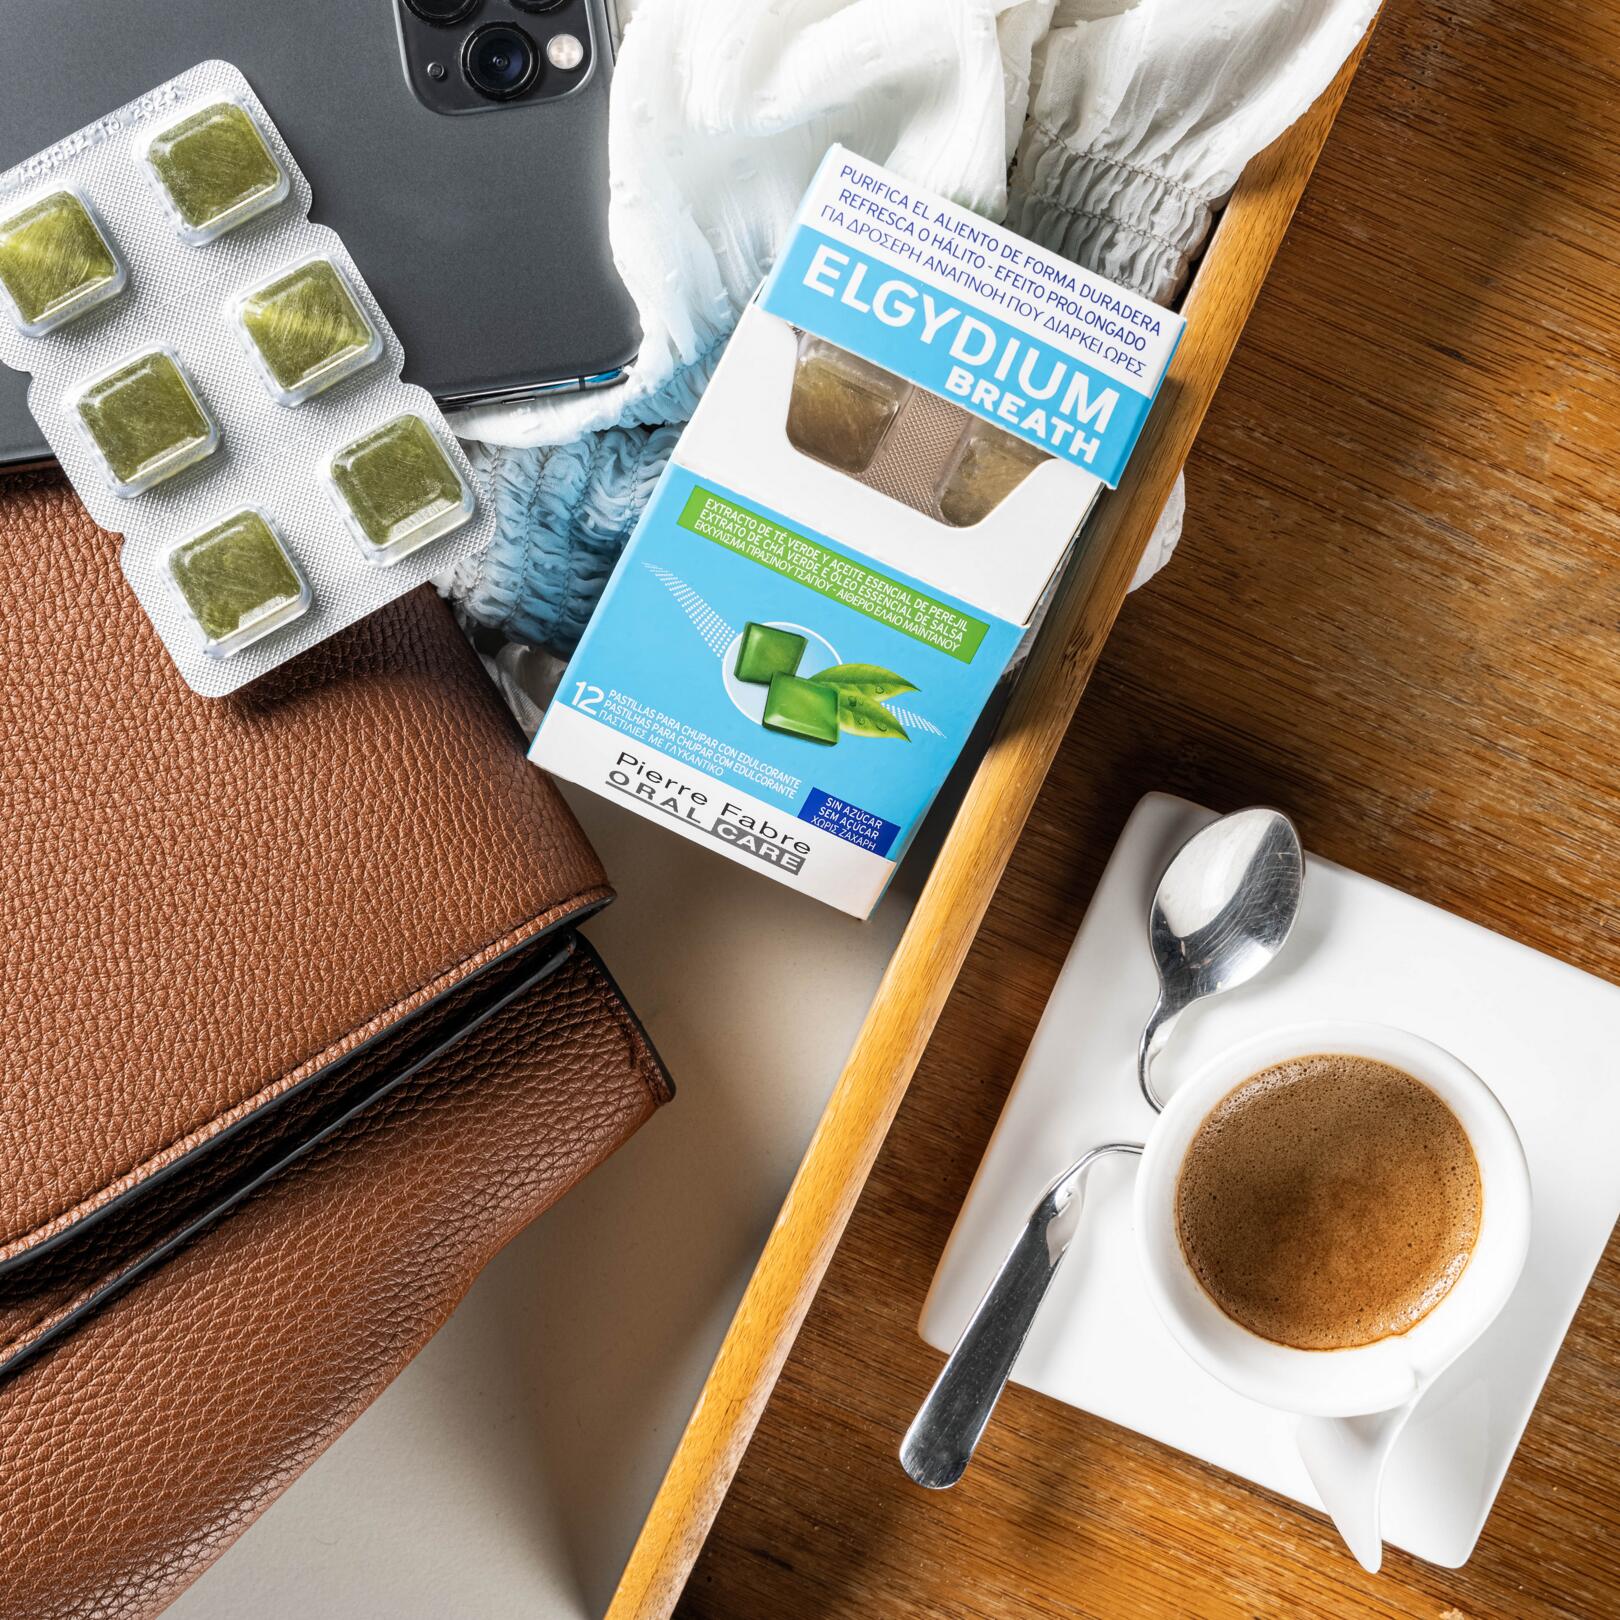 ELGYDIUM Fresh Pocket - tabletten tegen slechte adem